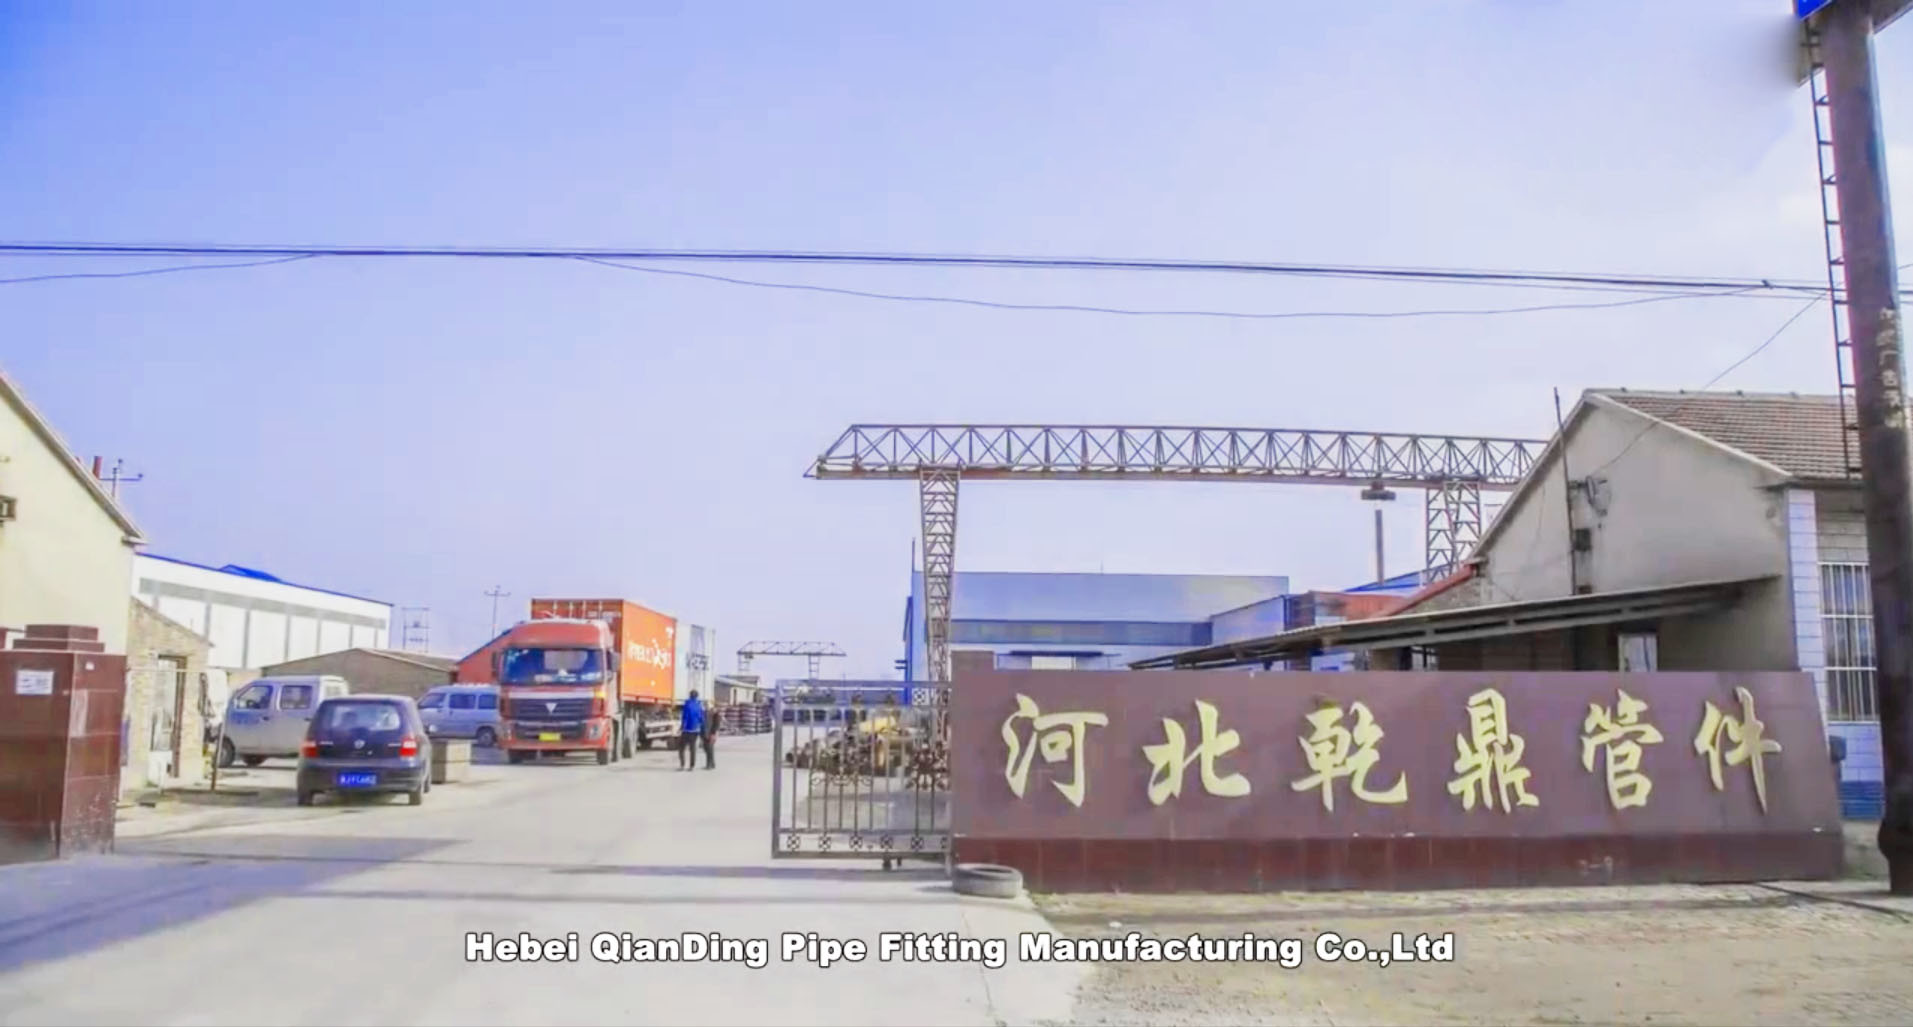 China Hebei Qianding Pipe Fitting Manufacturing Co., Ltd.